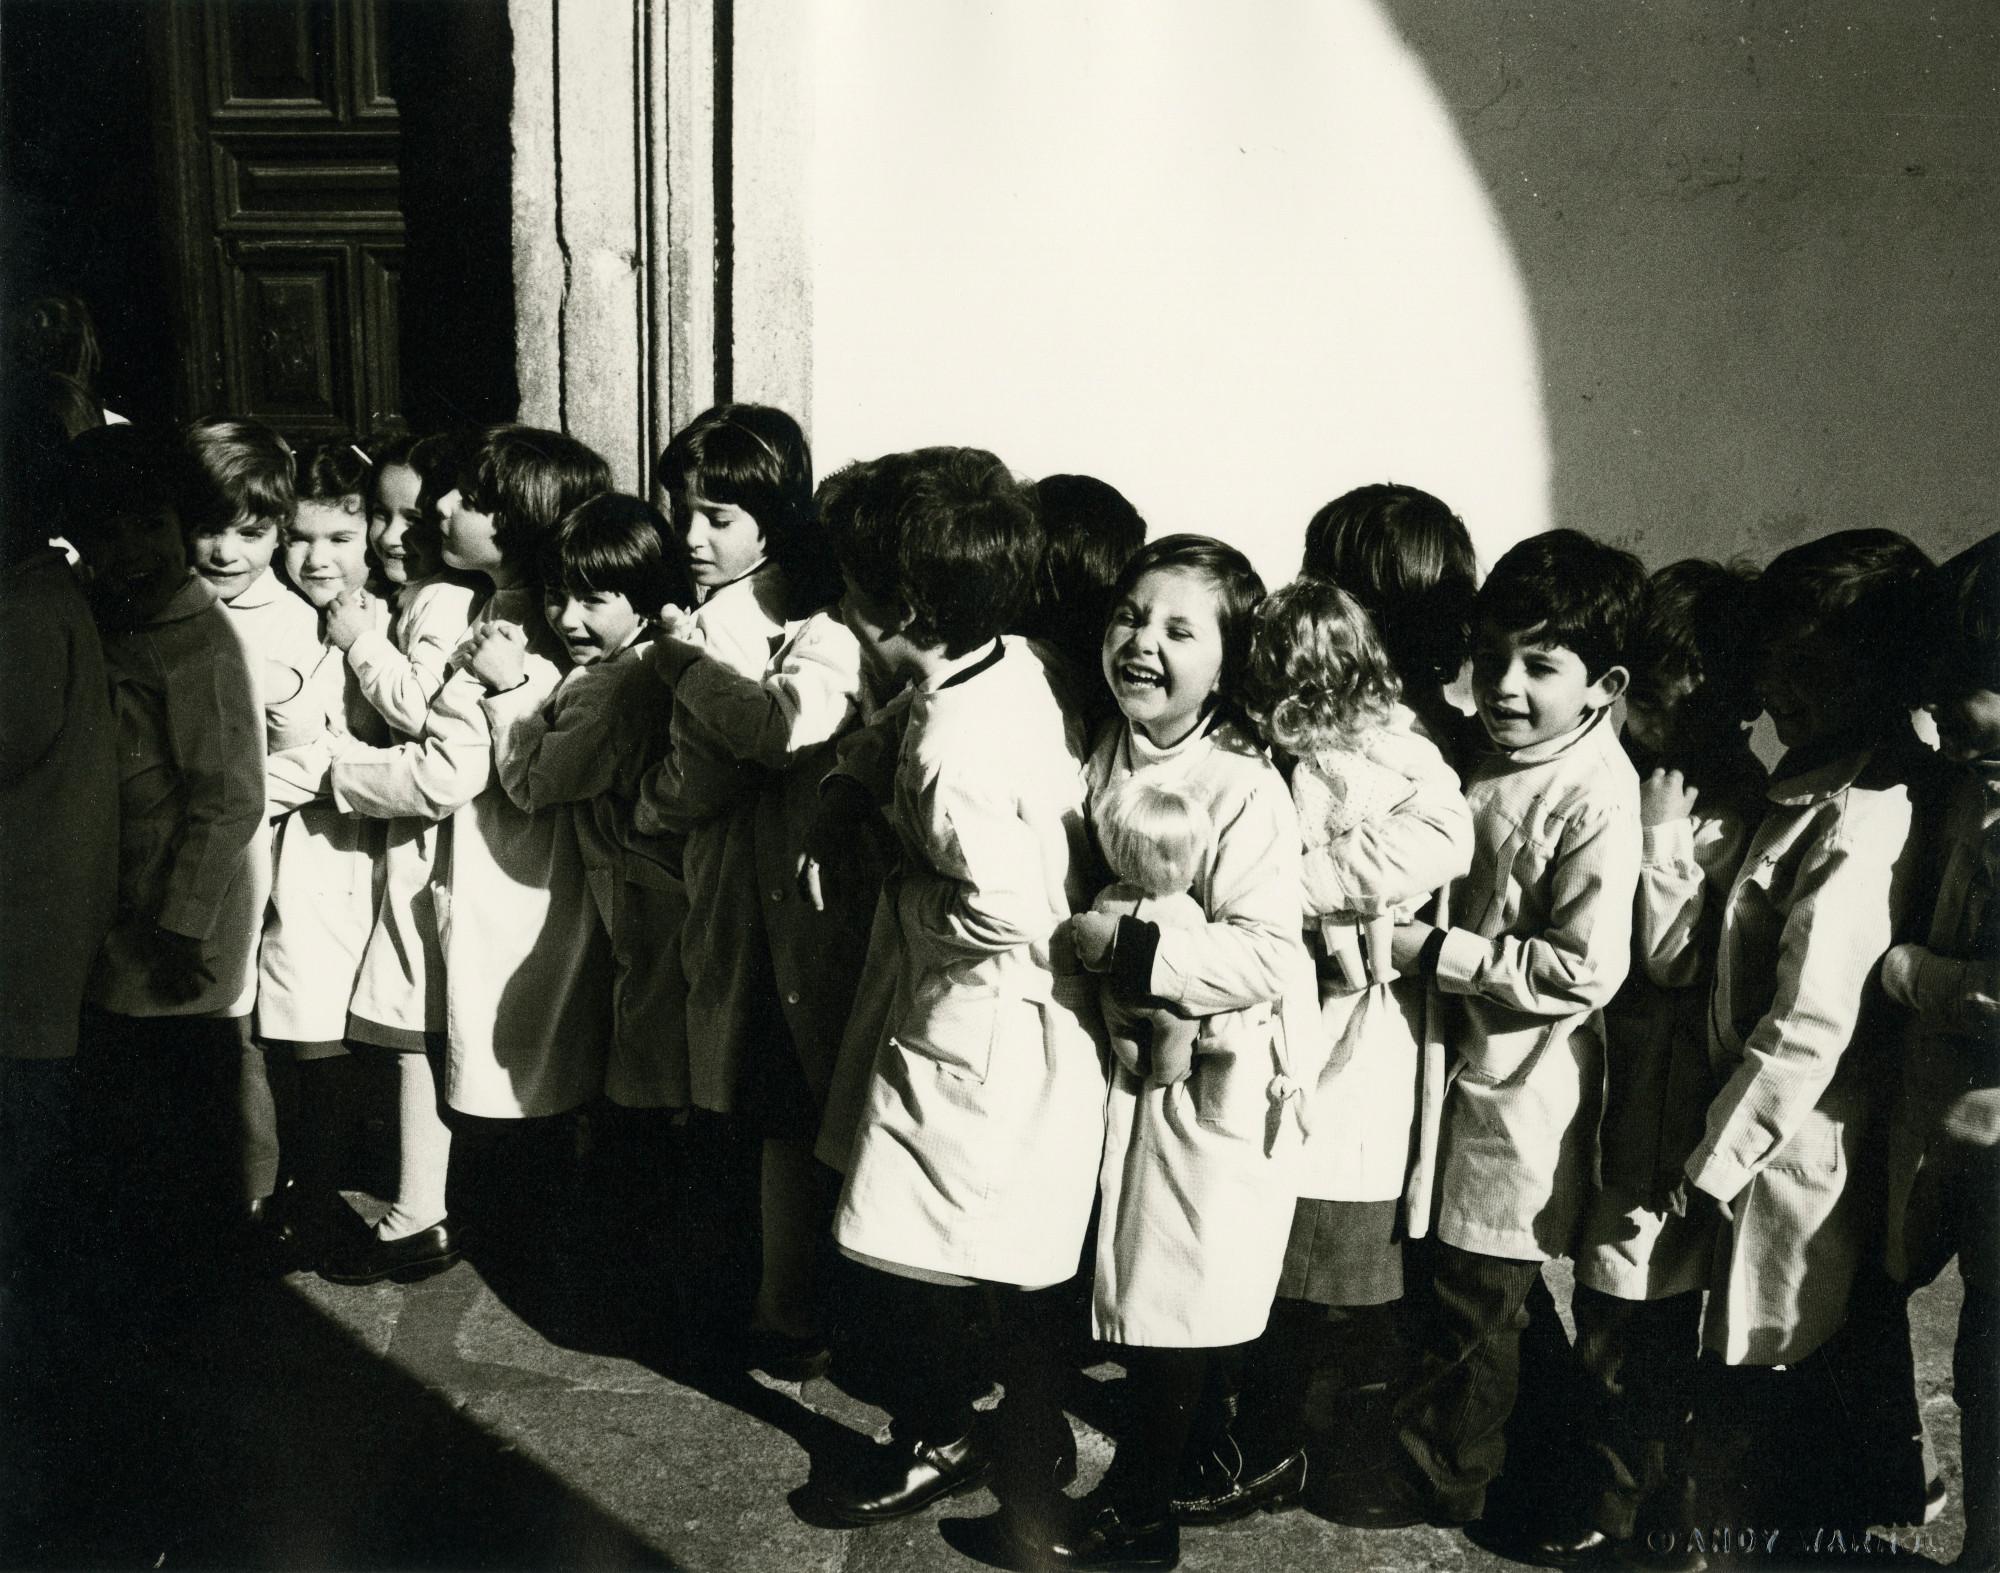 Andy Warhol Portrait Photograph - Schoolchildren in Spain